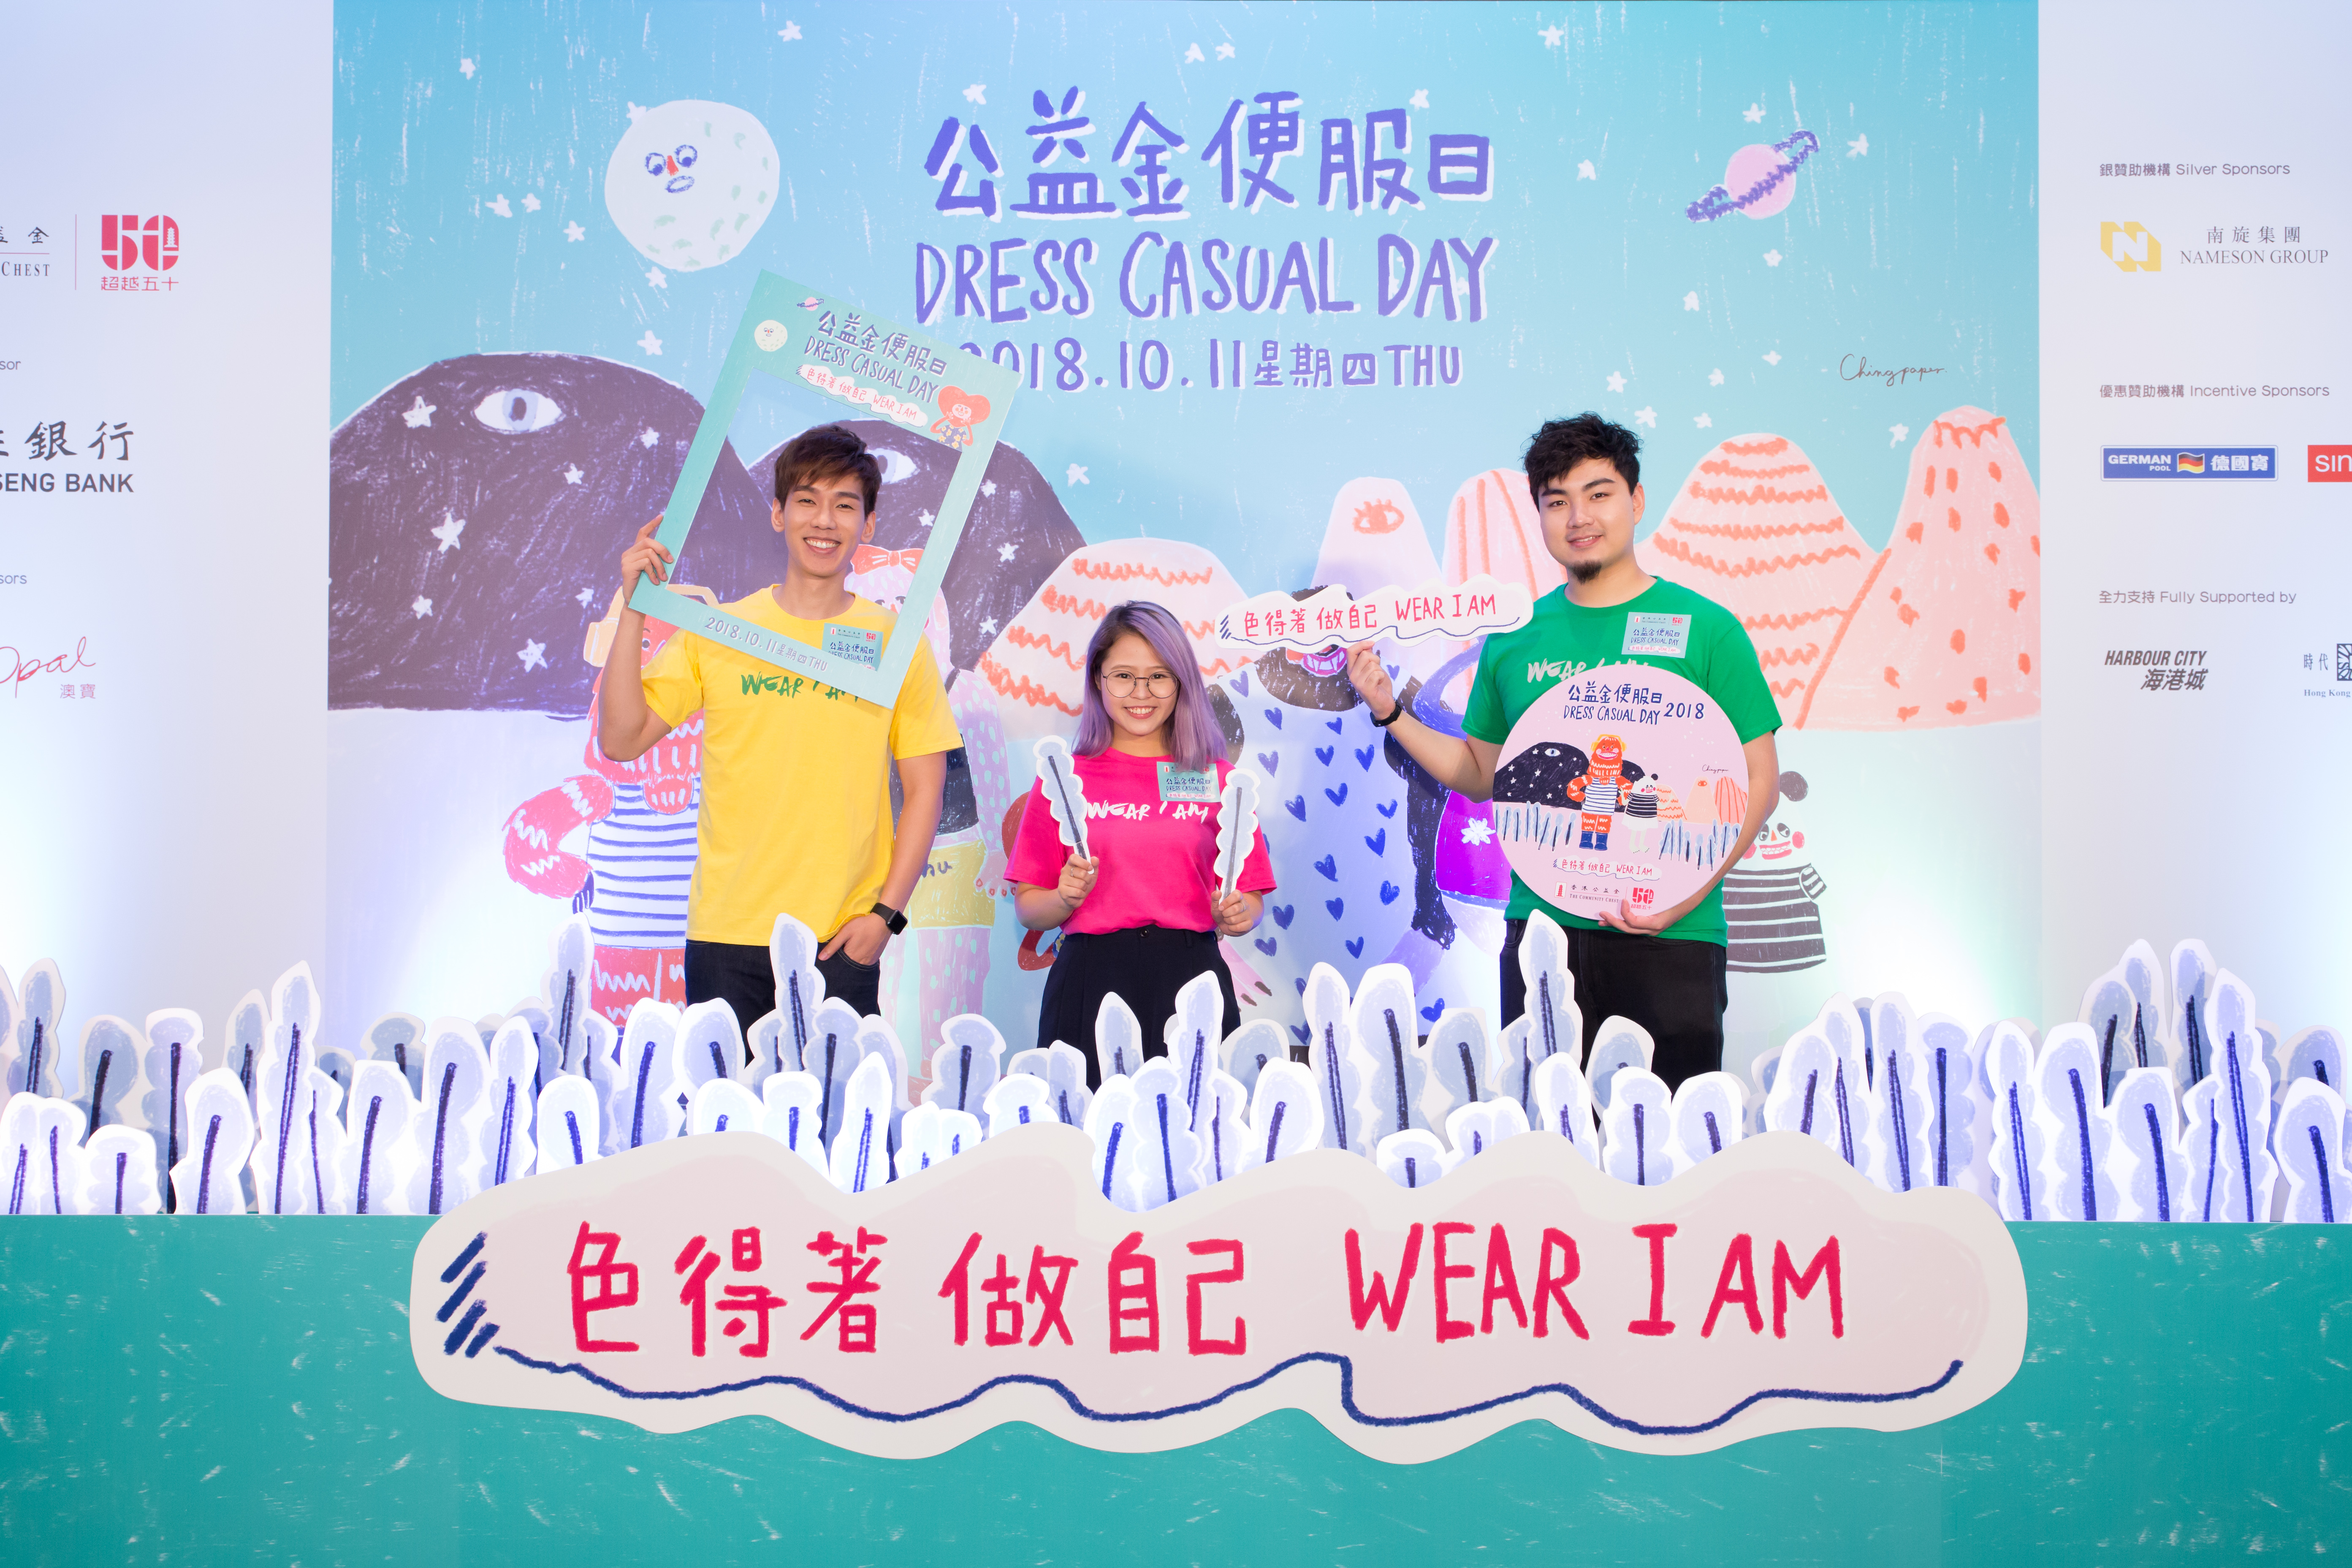 Dress Casual × Make a Difference Wear I Am at Community Chest Dress Casual  Day 2018 | The Community Chest of Hong Kong